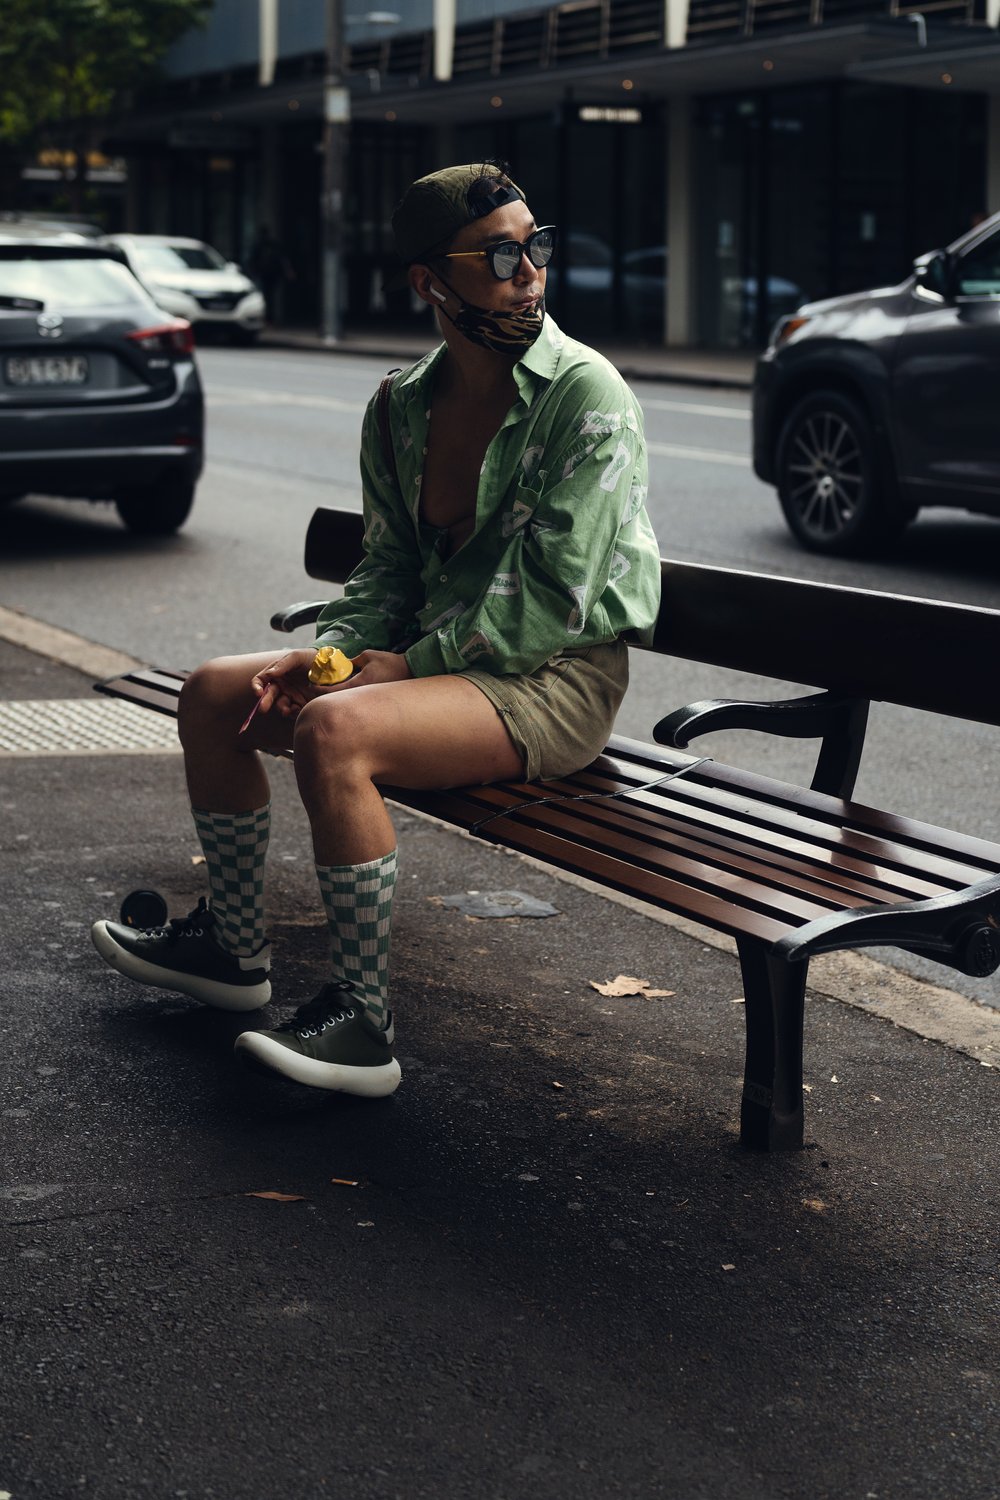 men's street style, fashion, sunglasses, green shirt with flower print, checkered socks